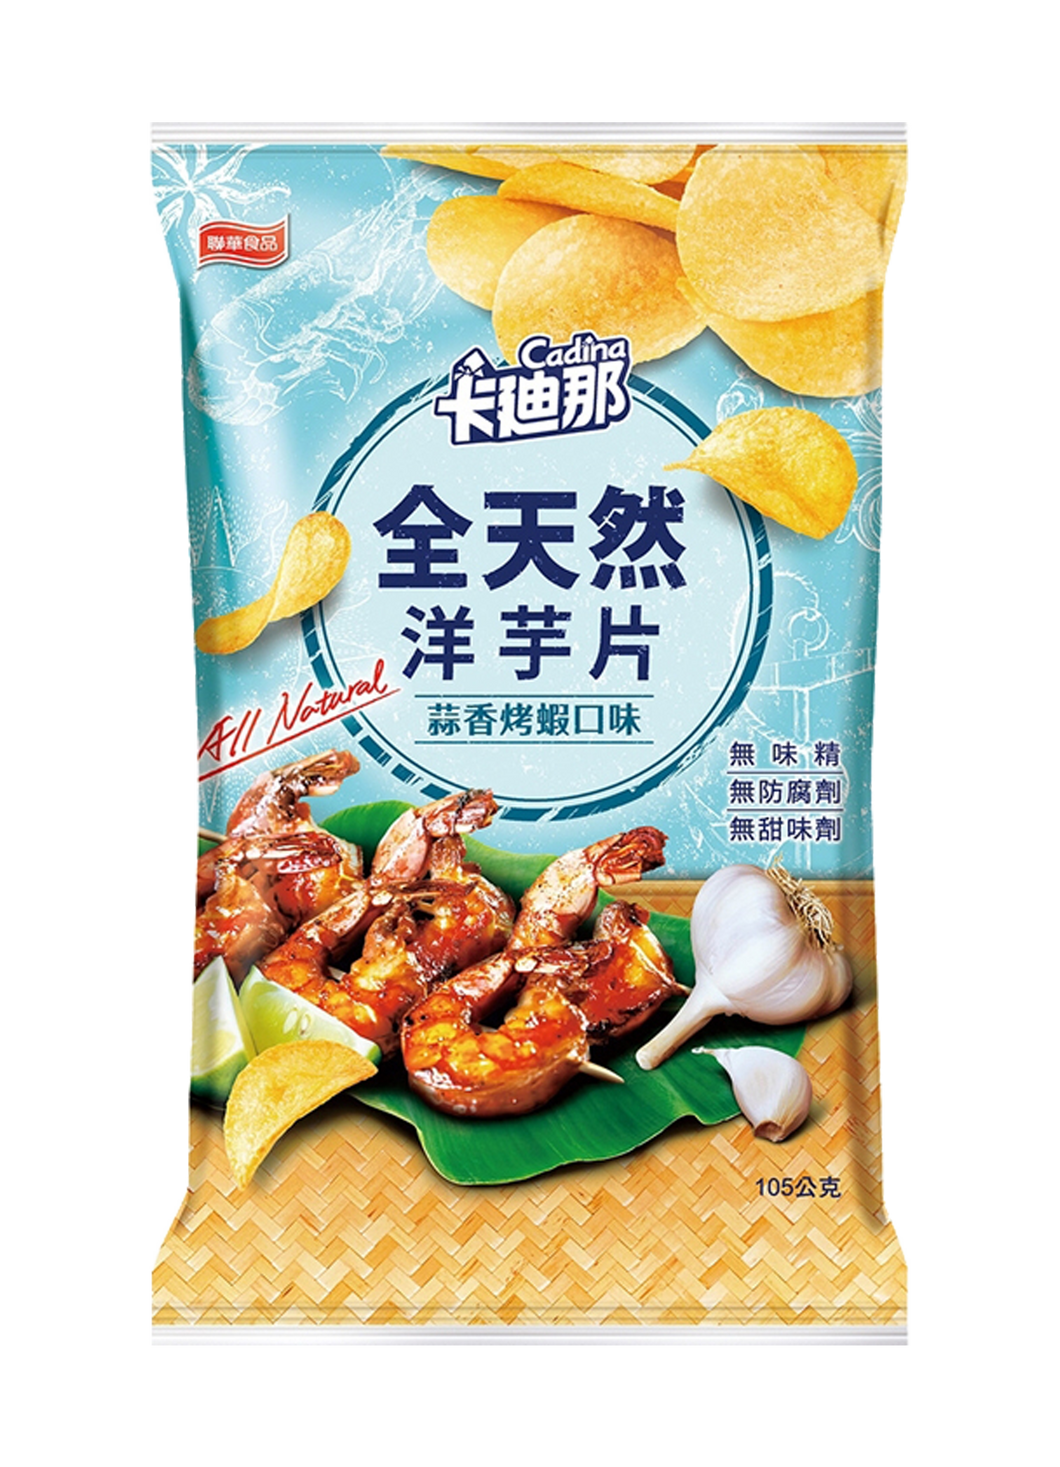 Cadina All Natural Potato Chips - Garlic Grilled Shrimp Flavour 78g